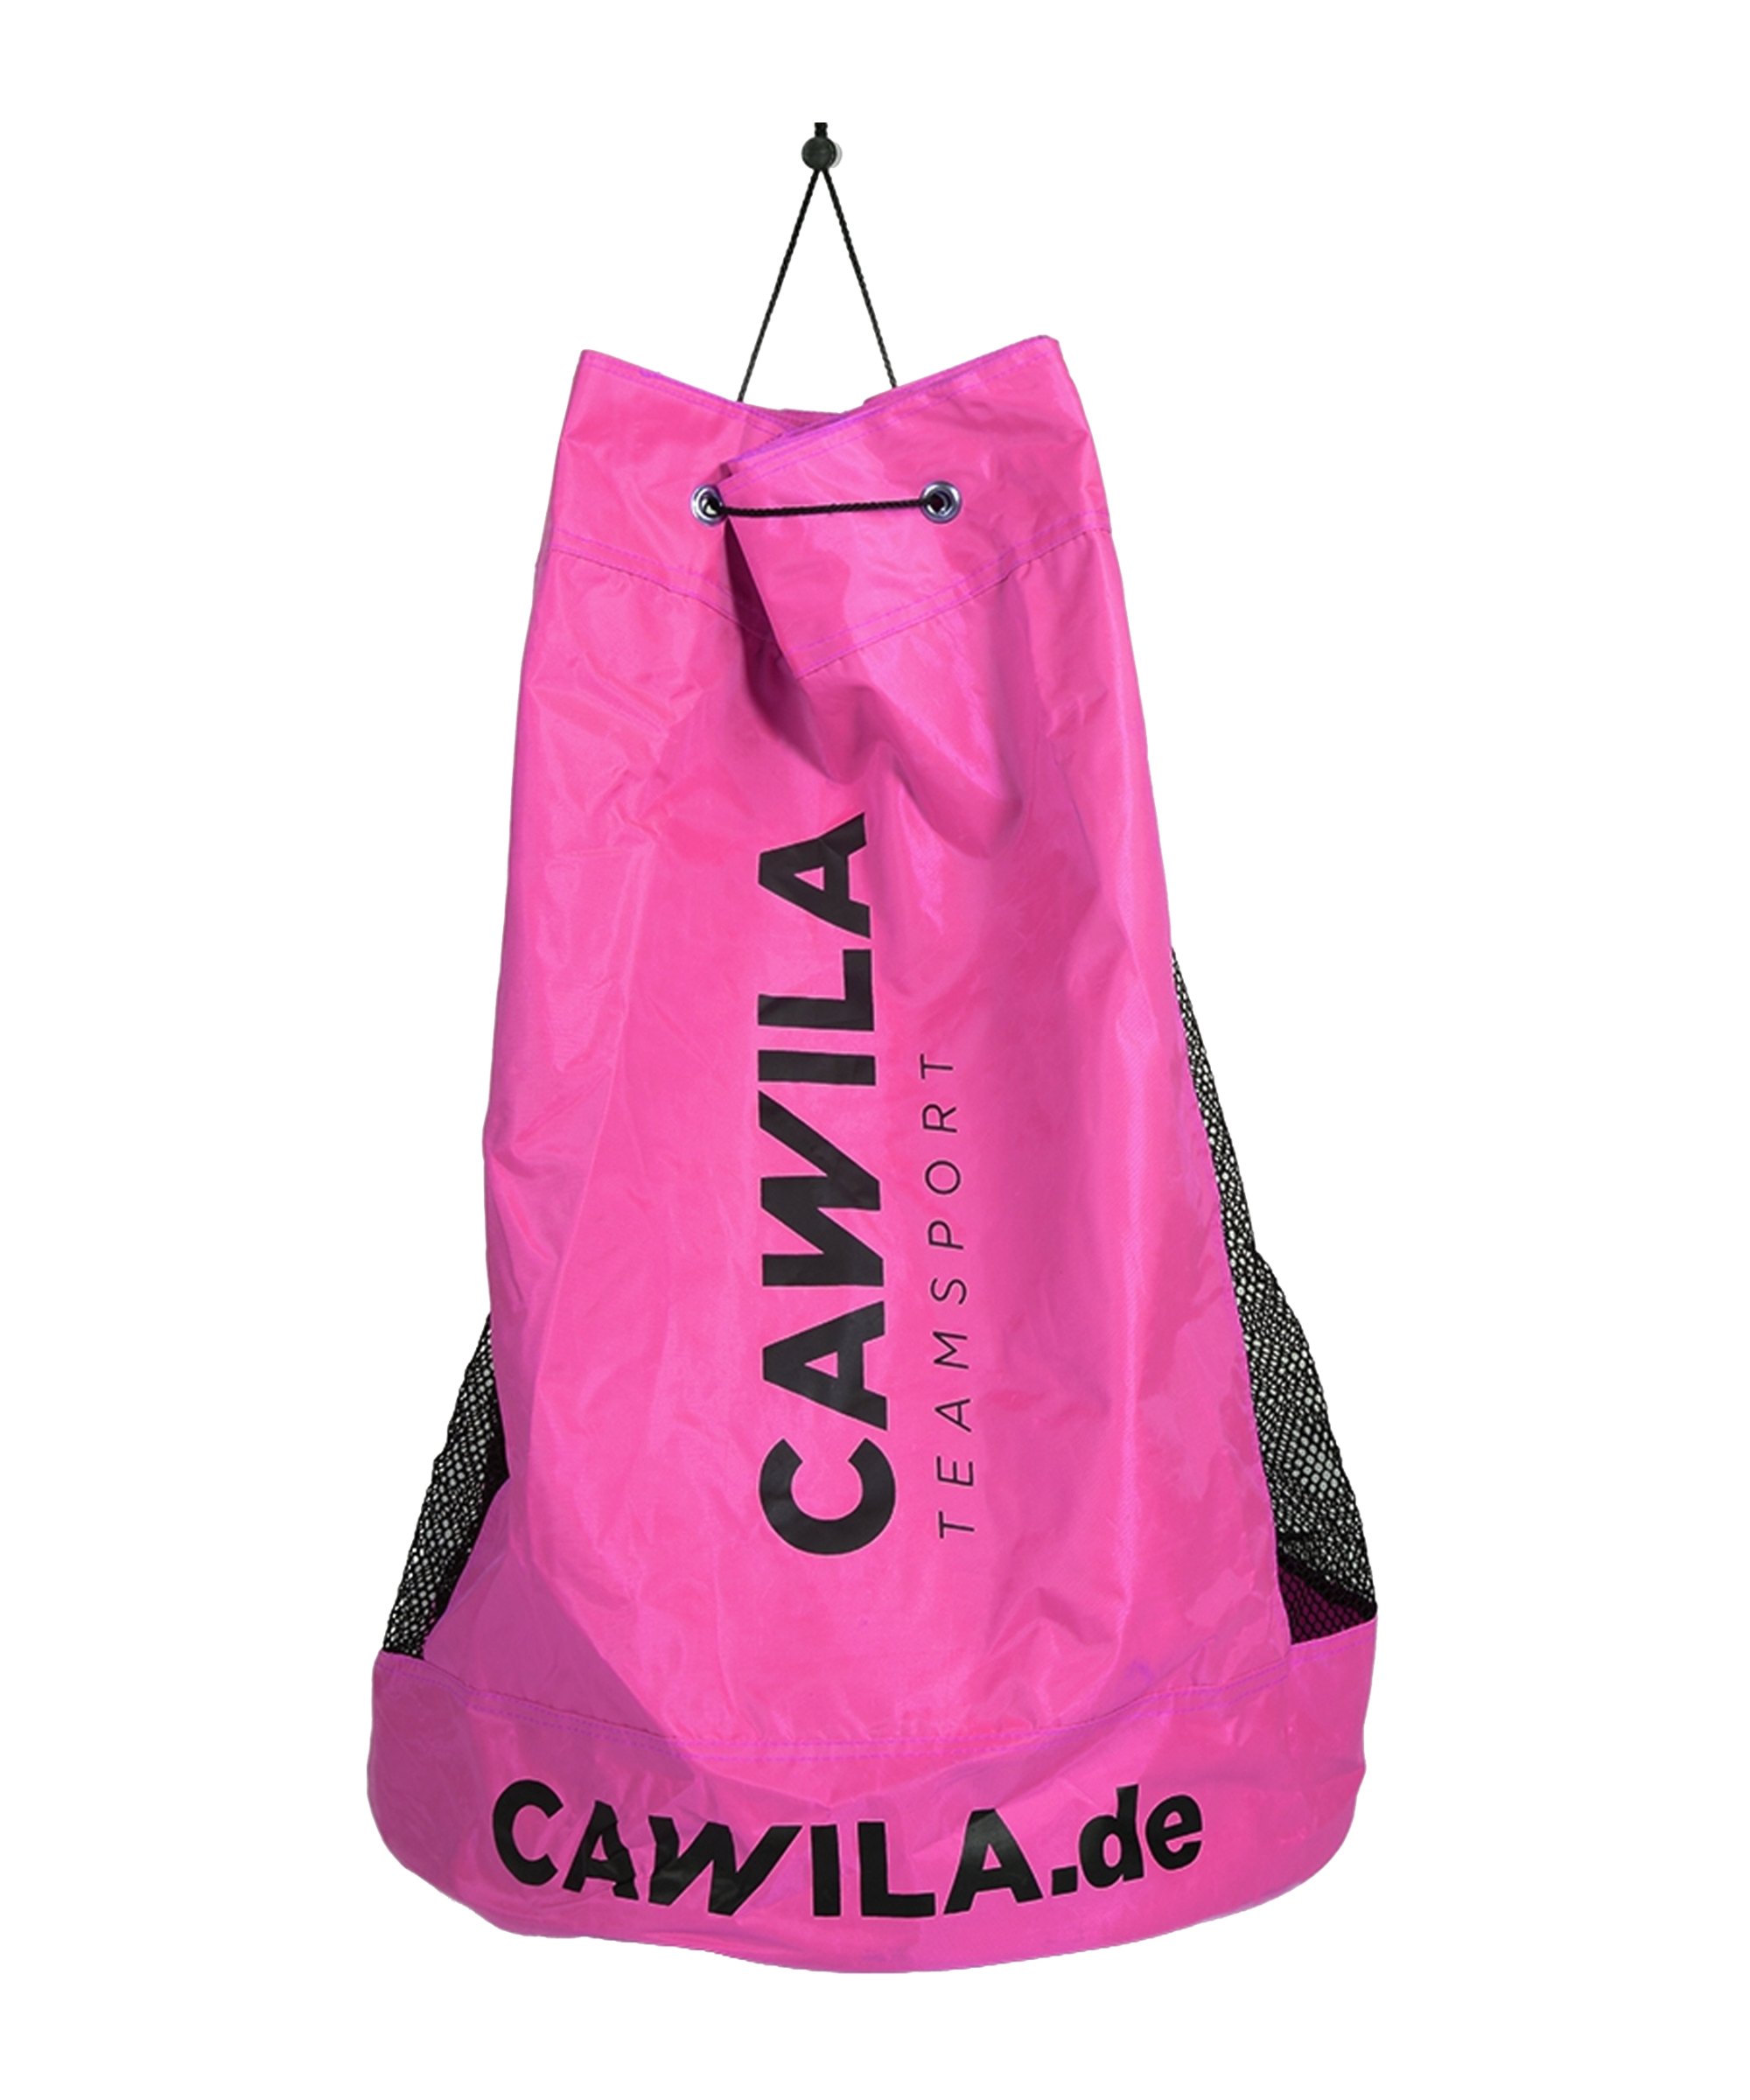 Cawila Ballsack 12 Fussbälle Pink - pink